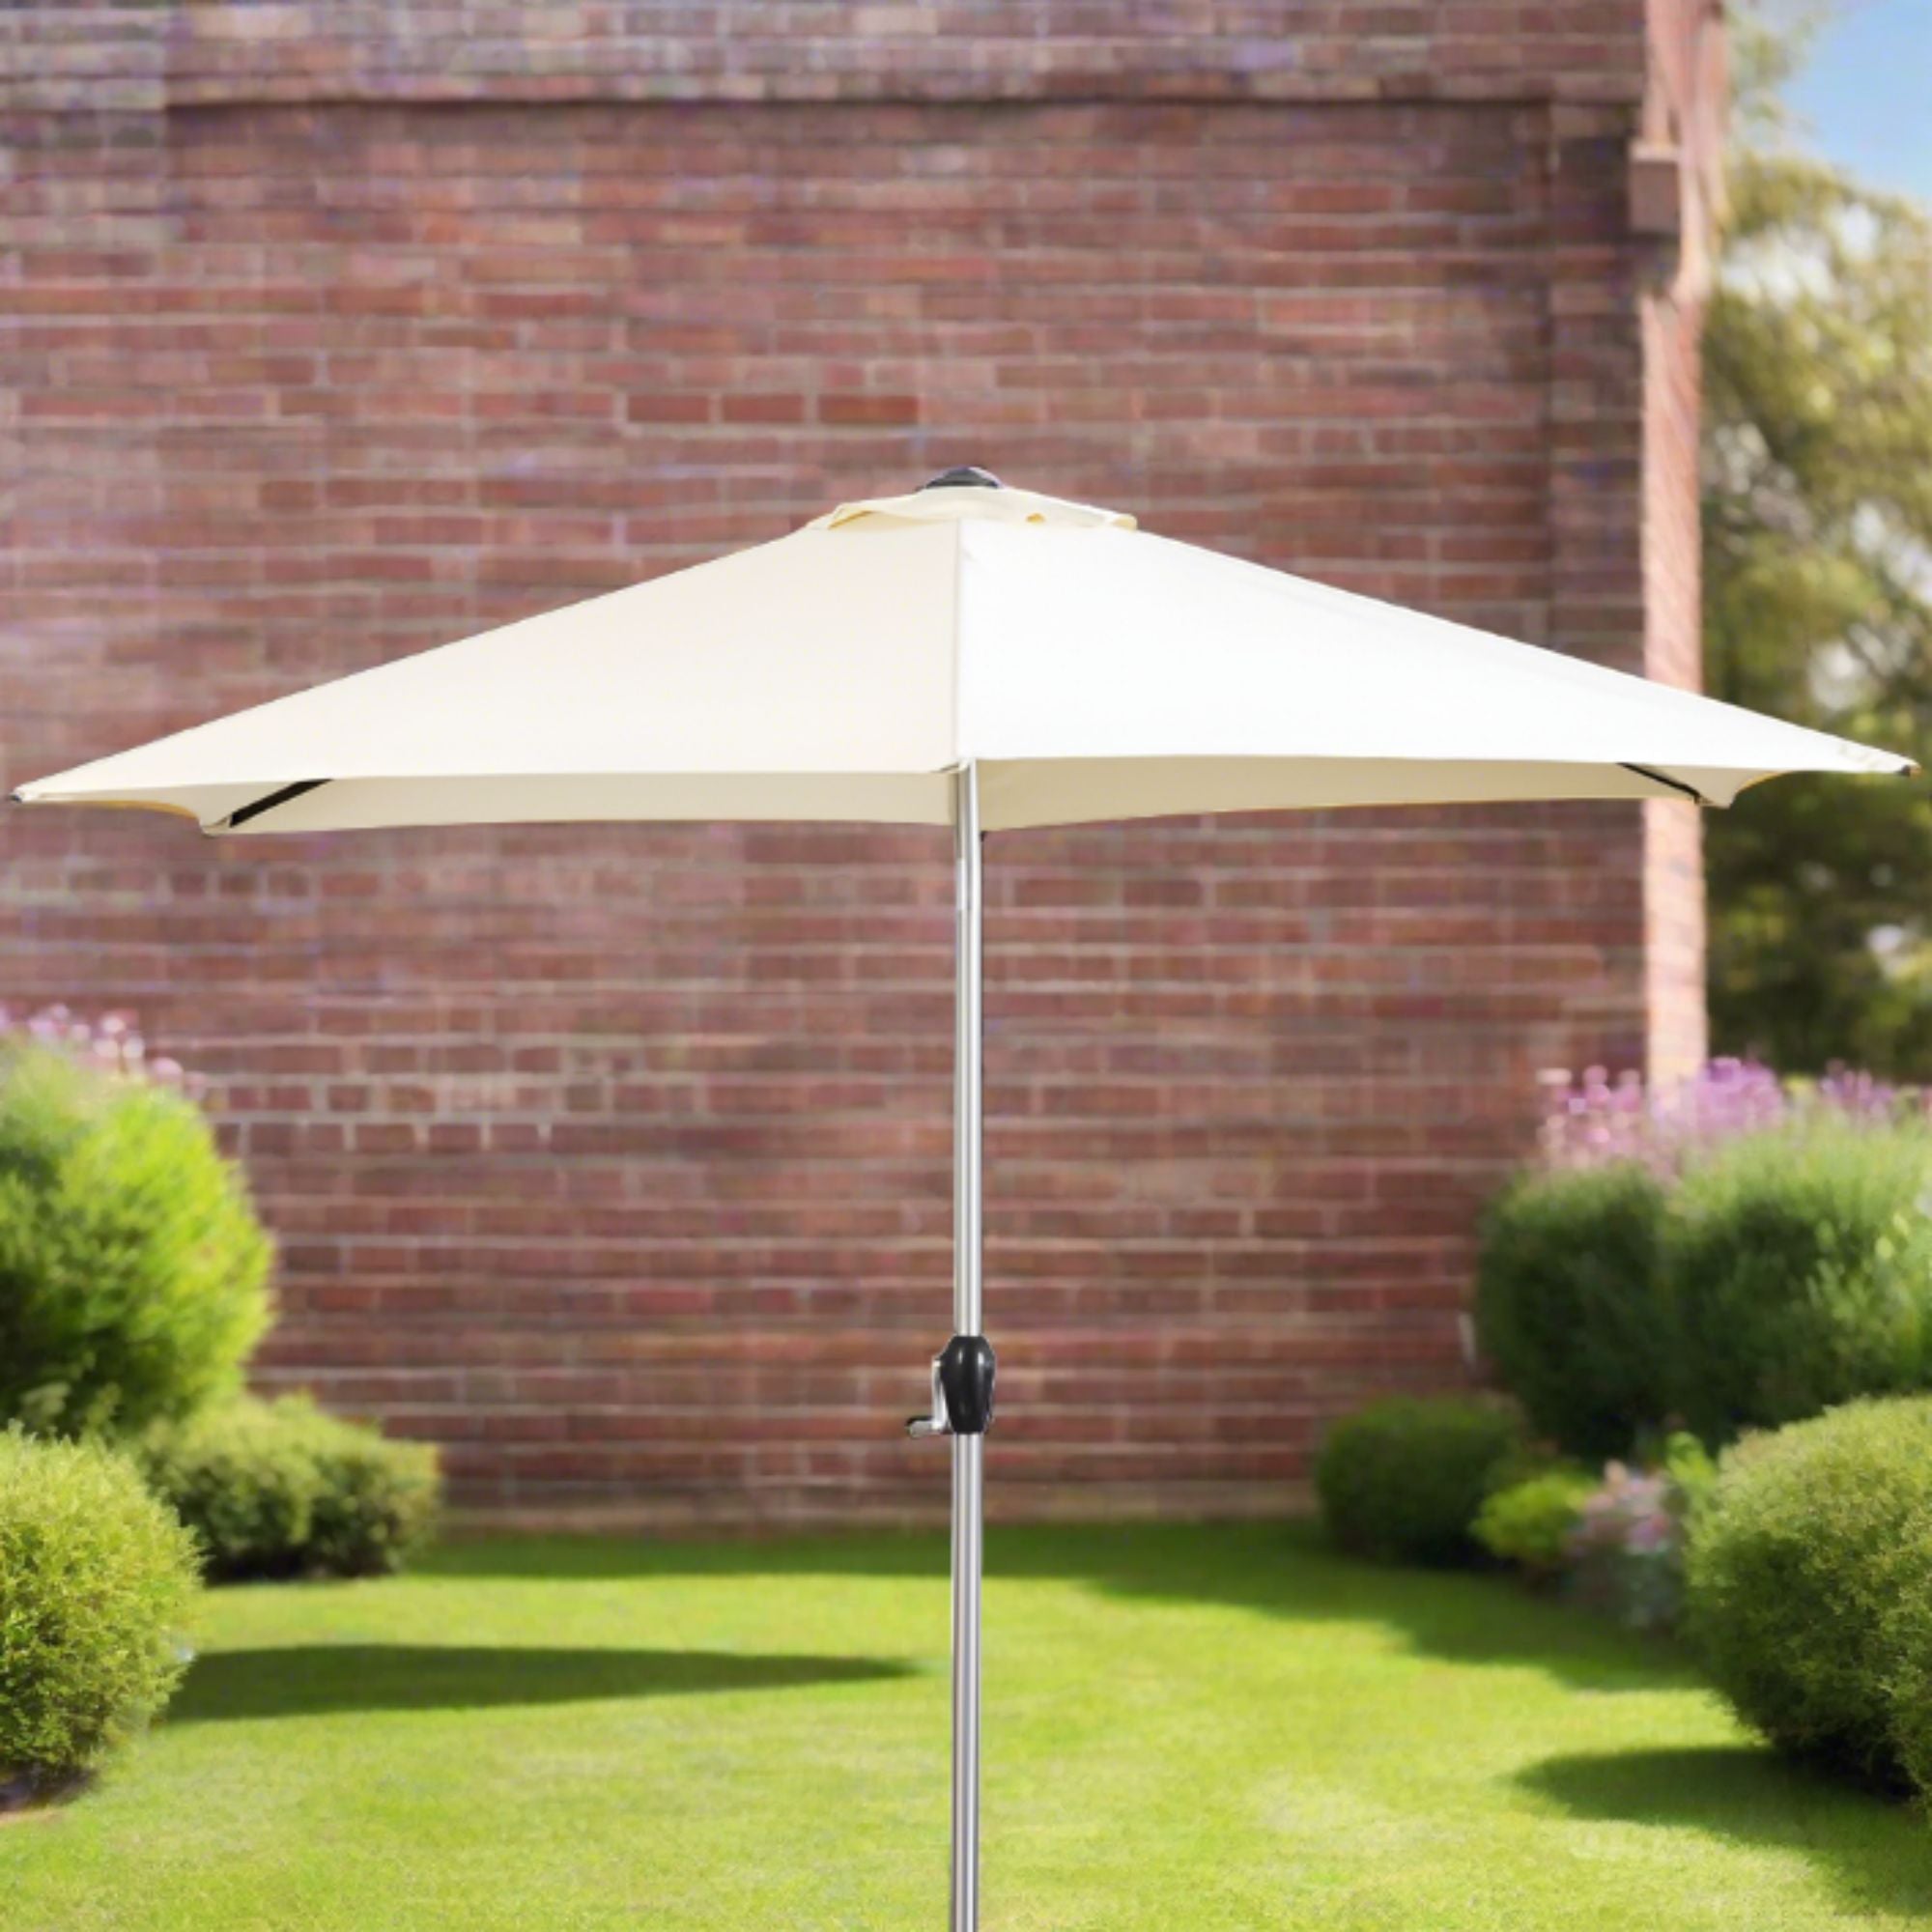 Vibo 2.7m adjustable cream parasol | malletandplane.com